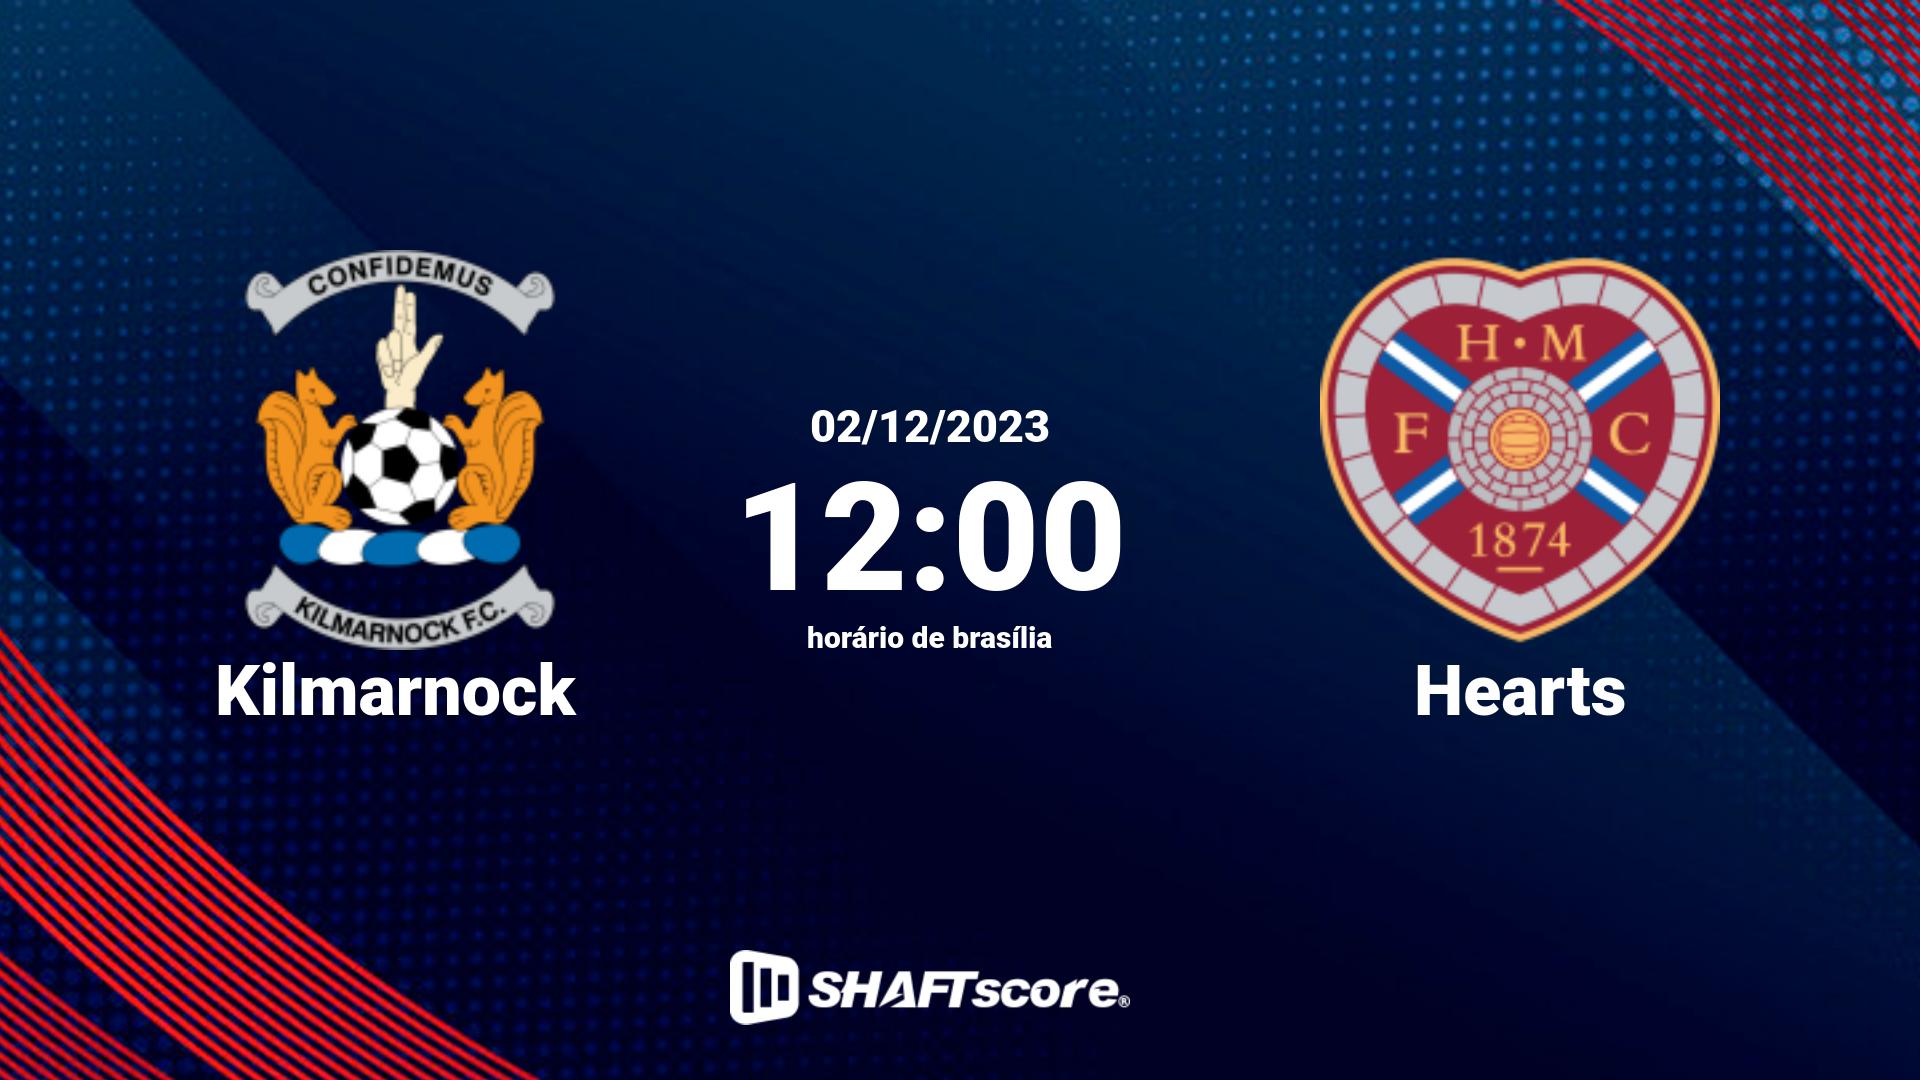 Estatísticas do jogo Kilmarnock vs Hearts 02.12 12:00